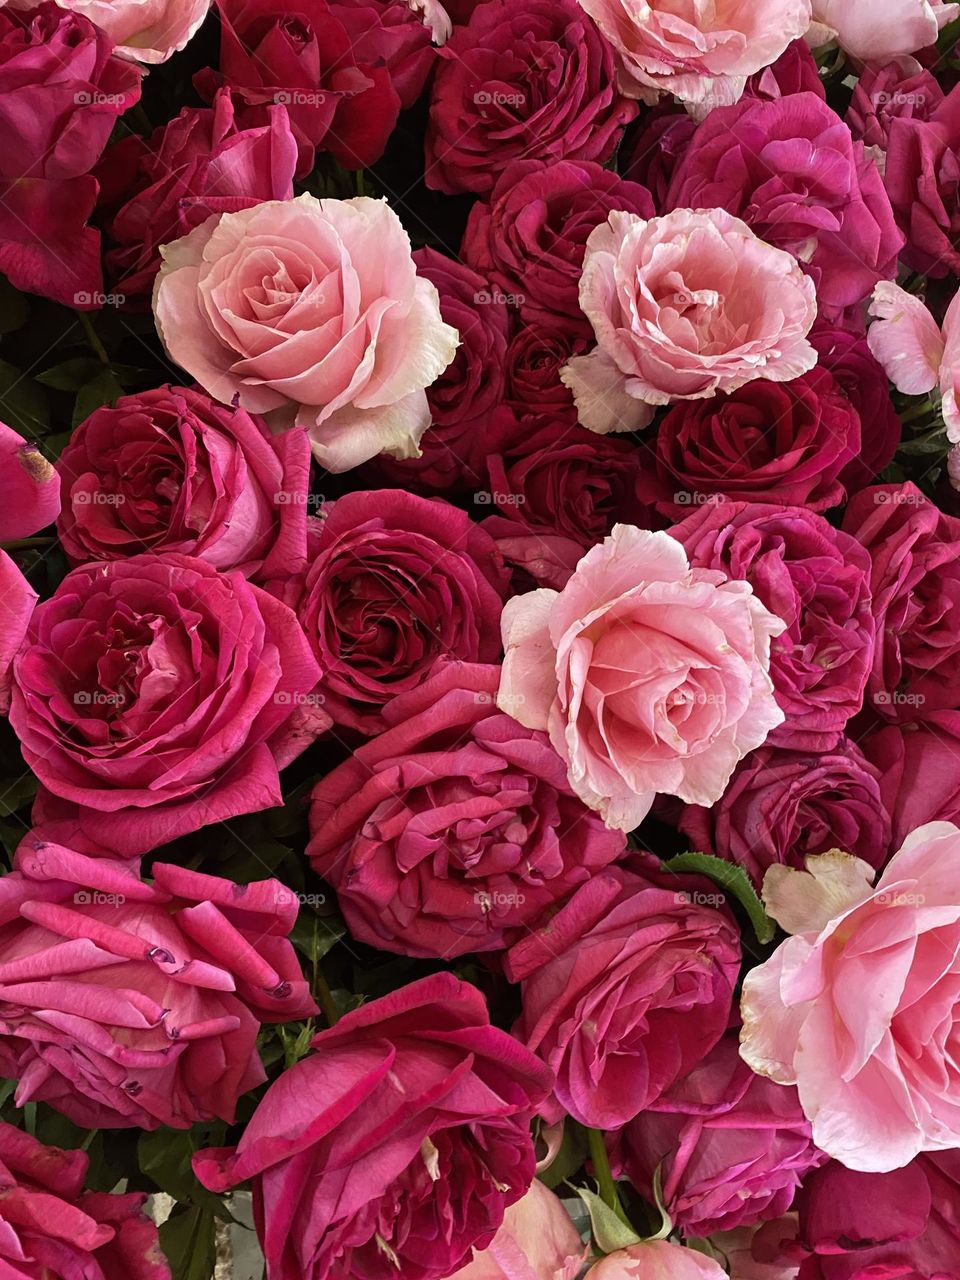 Pink shades of roses